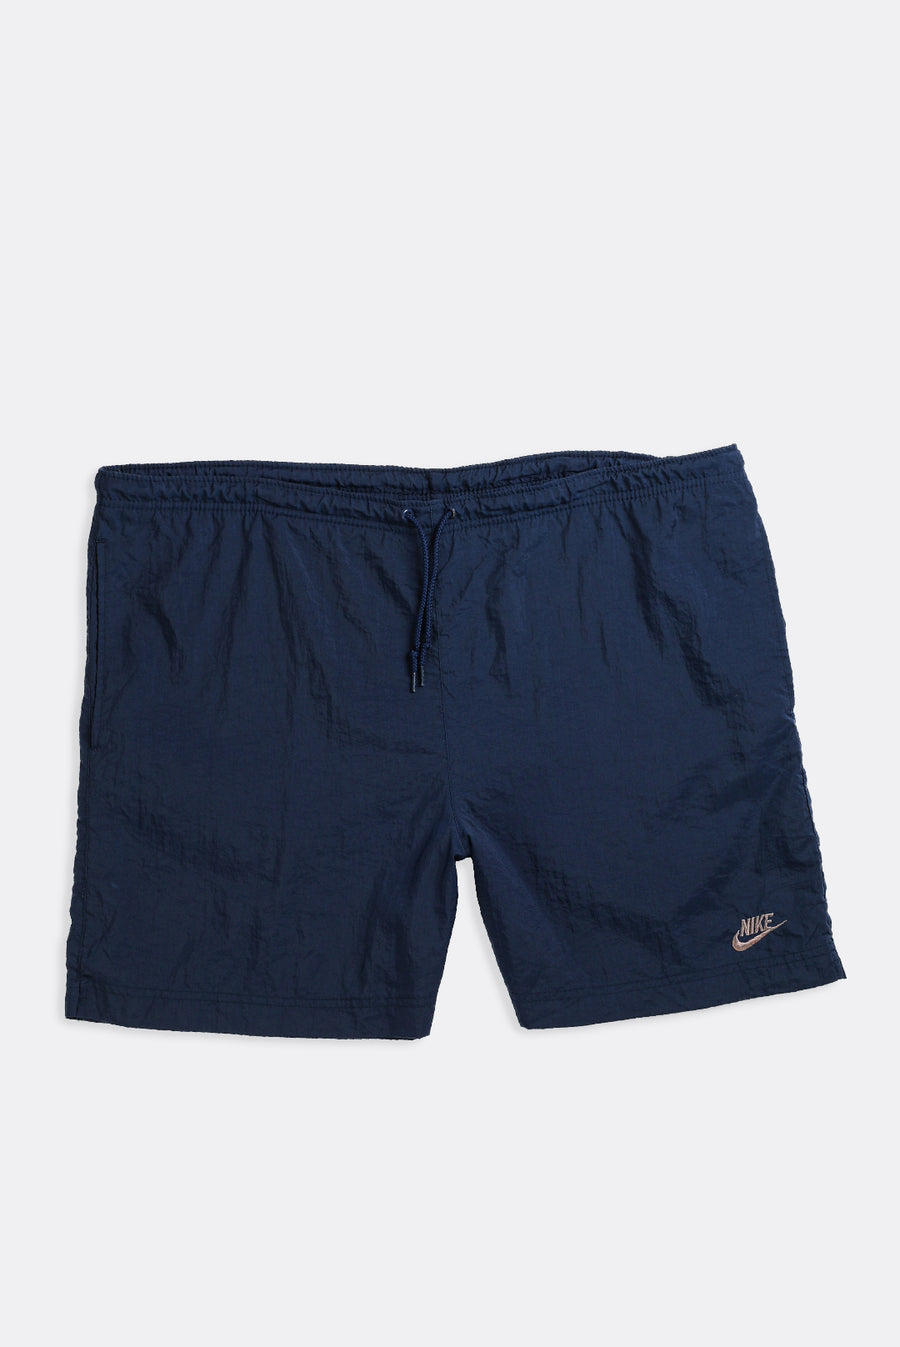 Vintage Nike Shorts - XXL